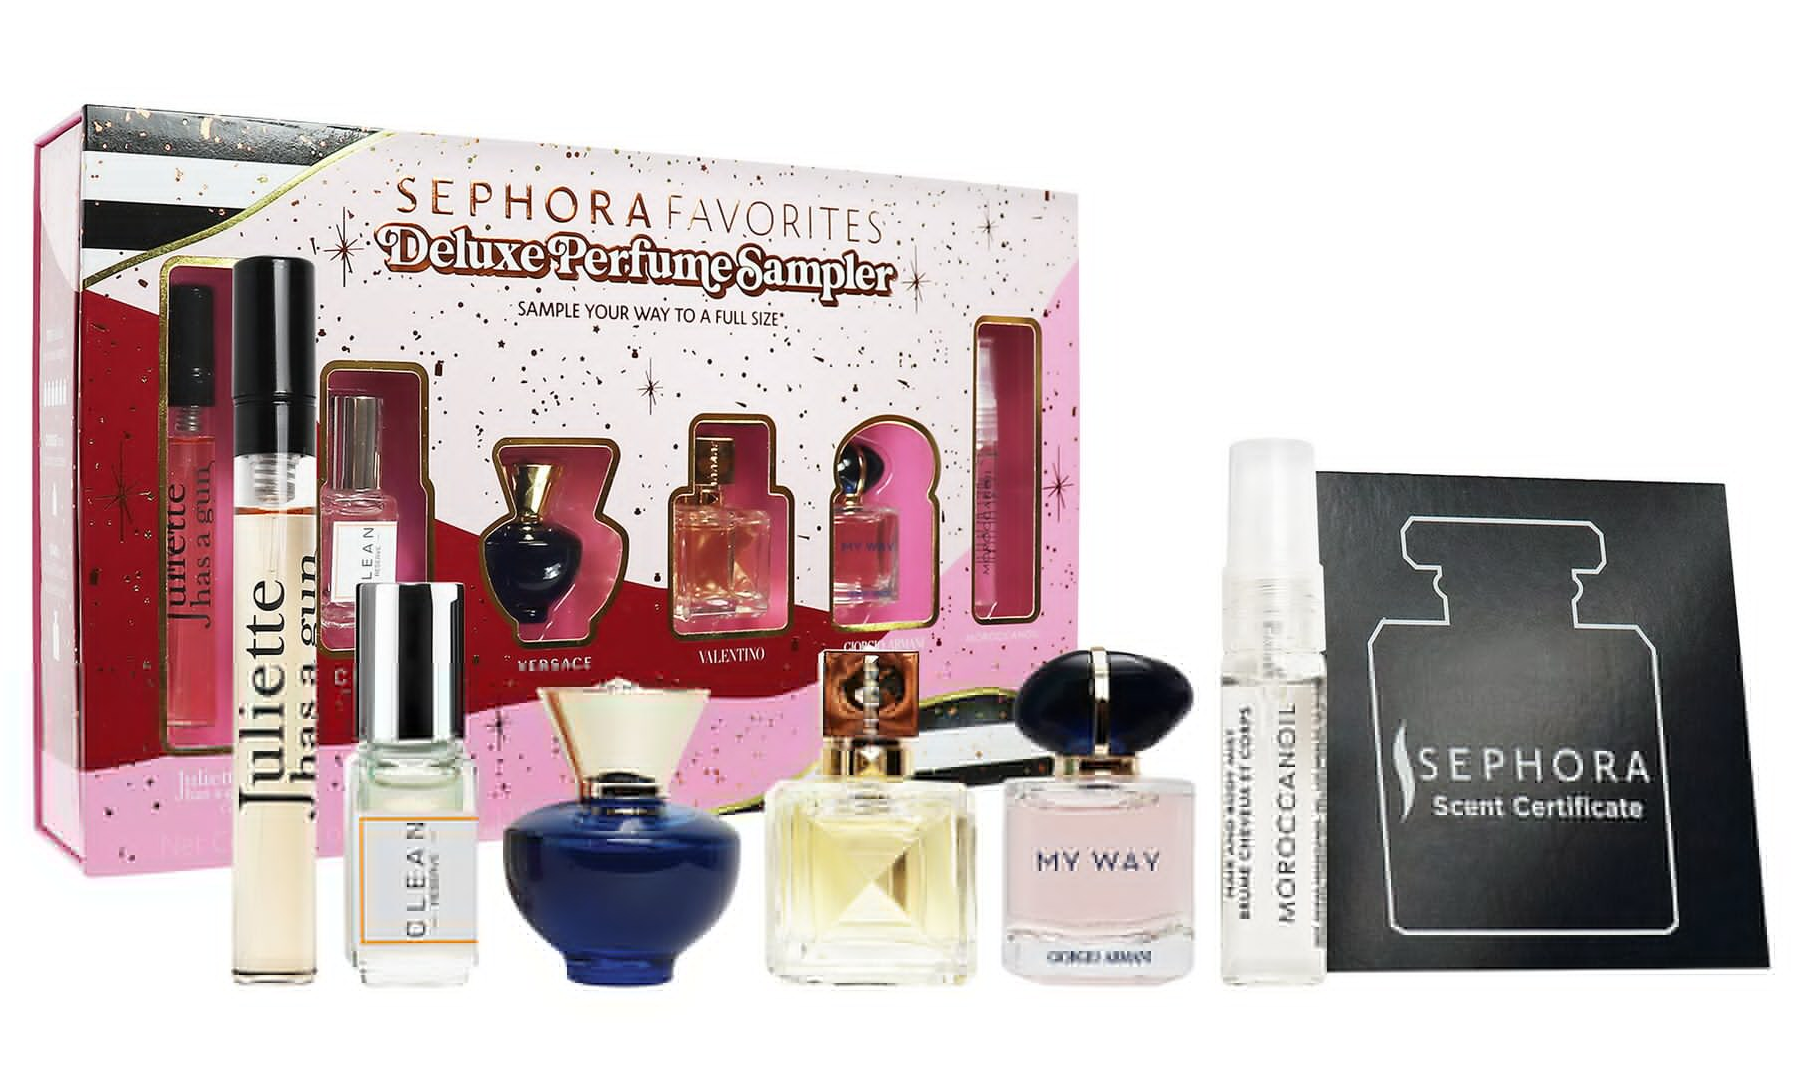 New Sephora Favorites Deluxe Perfume Sampler Set! - Hello Subscription